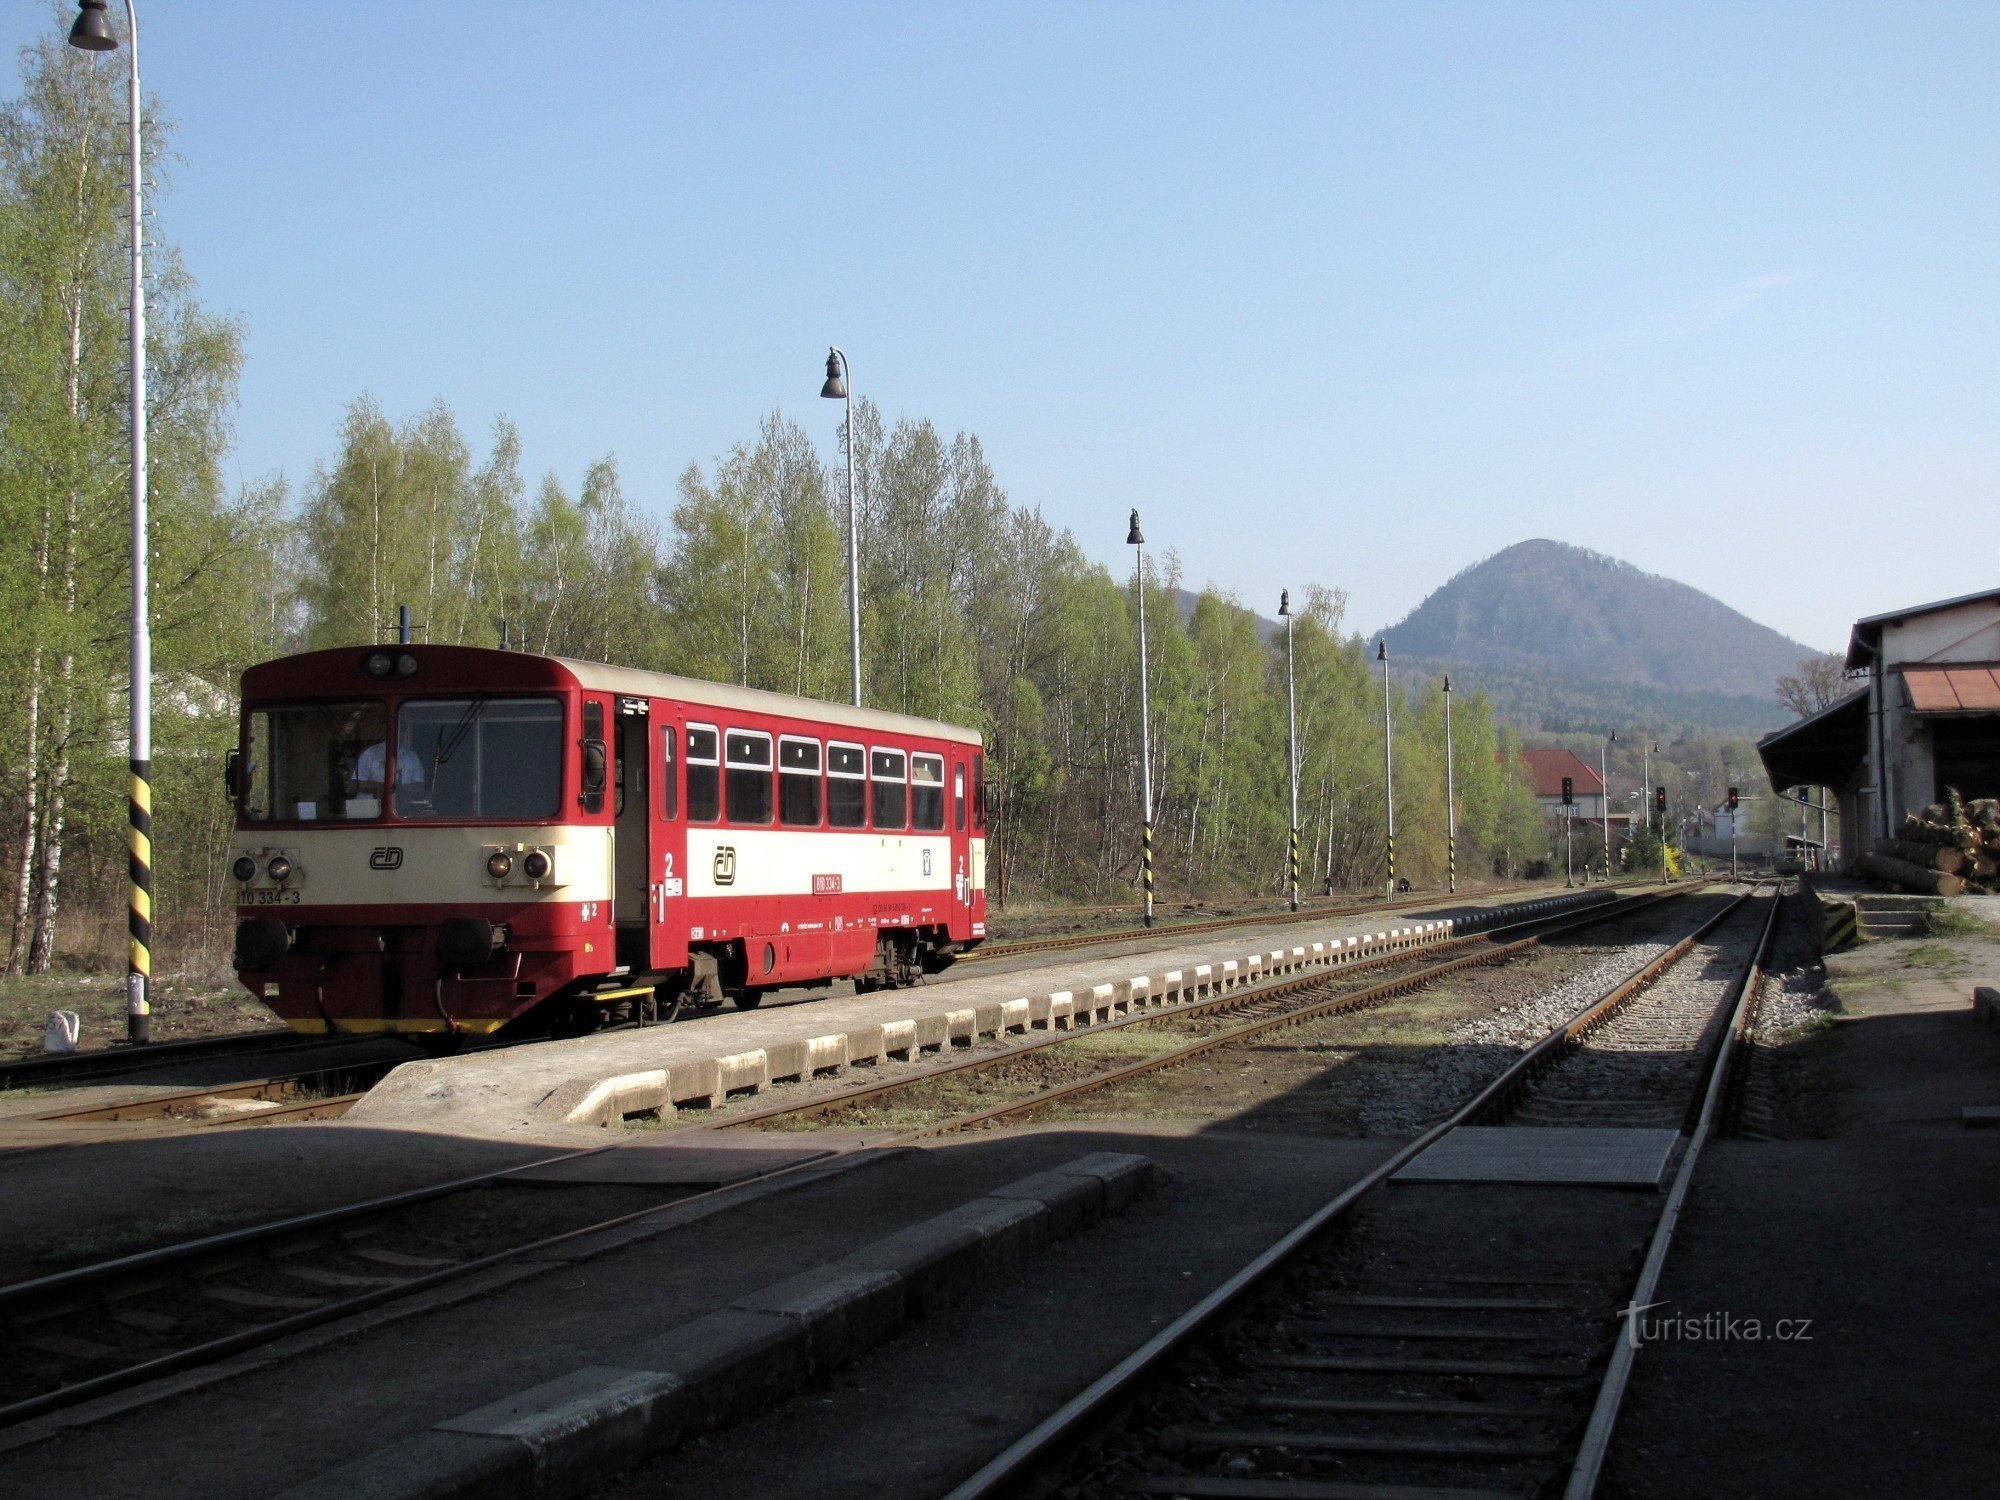 Platform, Klíč mountain in the background